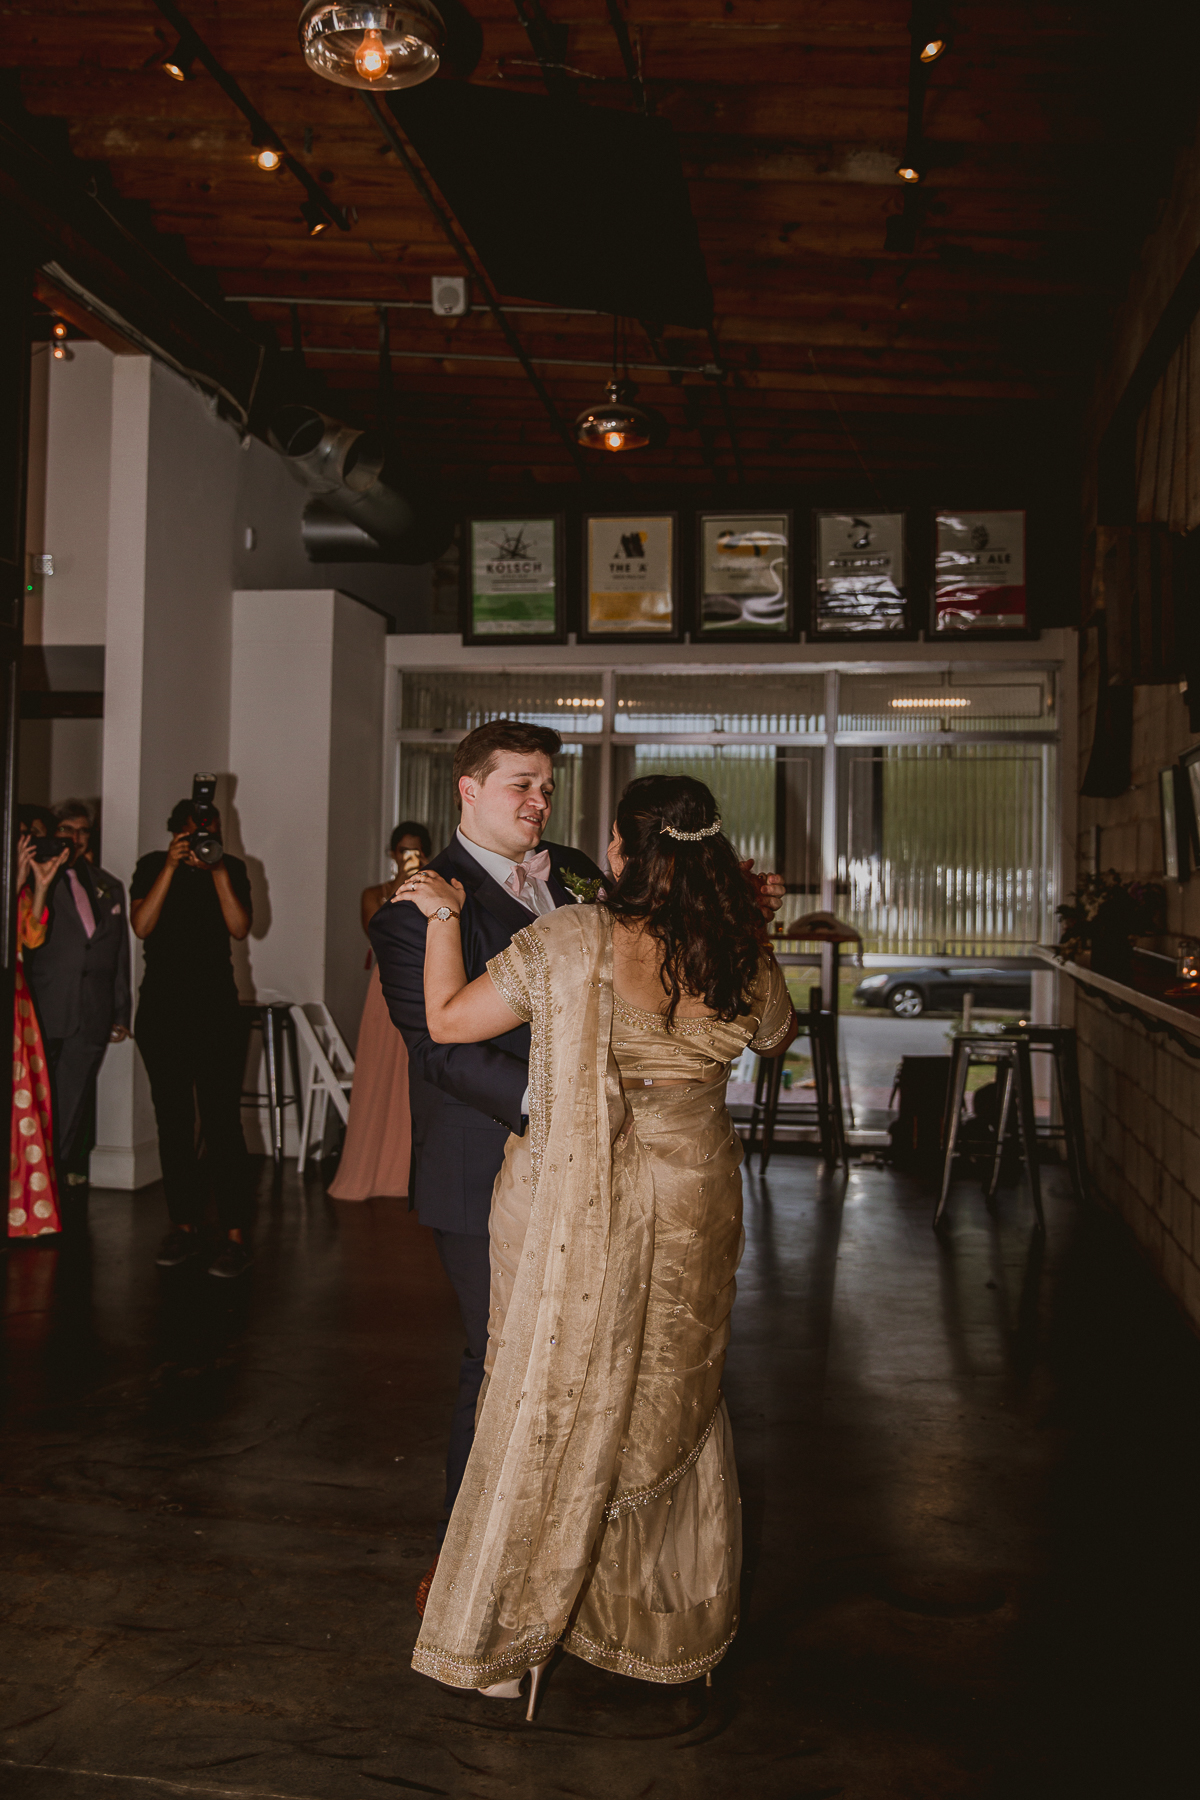 eventide-brewery-indian-american-fusion-kelley-raye-atlanta-los-angeles-wedding-photographer-105.jpg